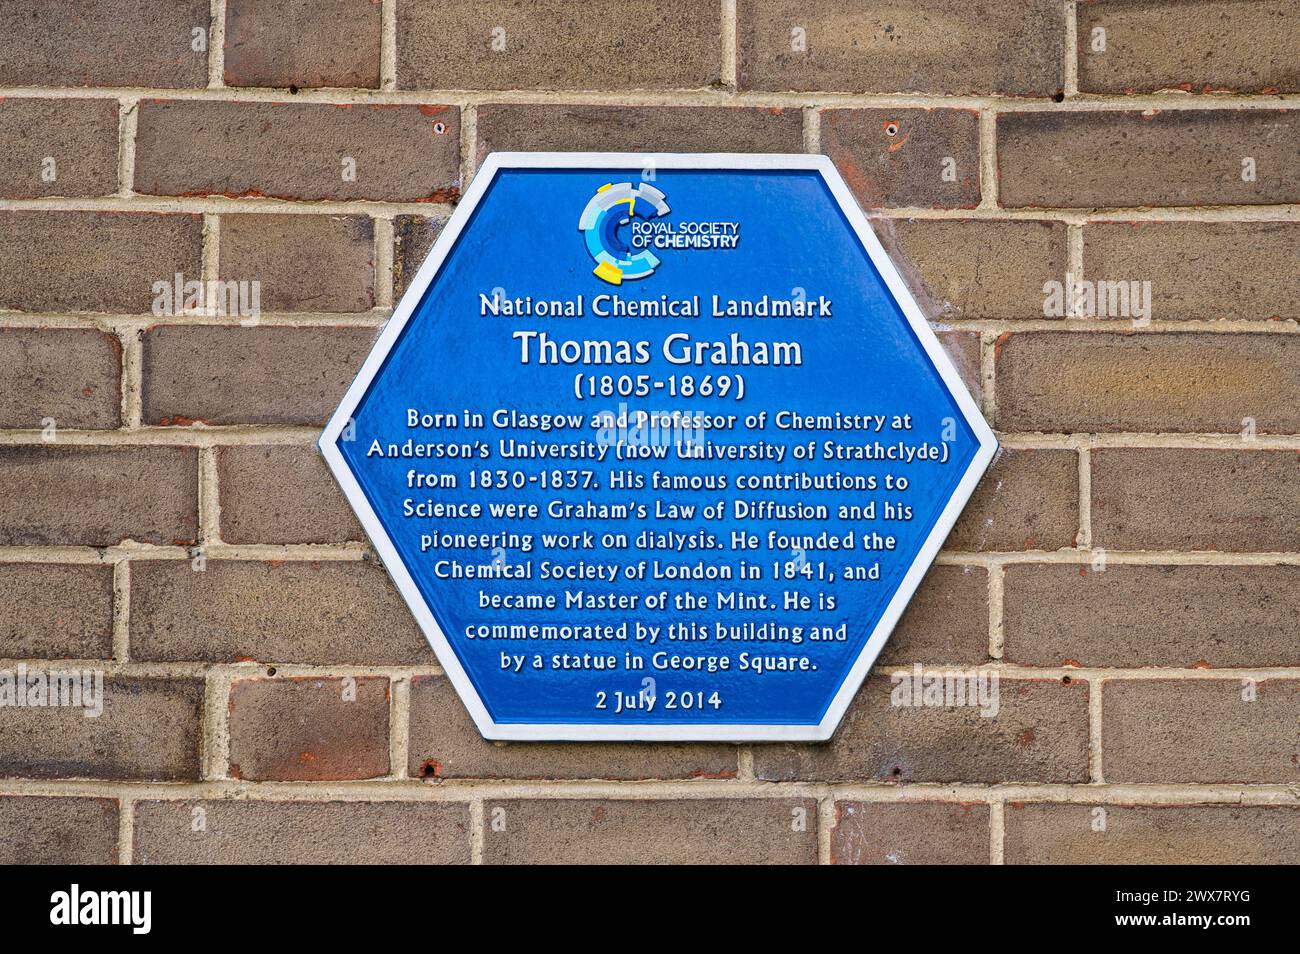 Royal Society of Chemistry plaque to commemorate chemist Professor Thomas Graham at the University of Strathclyde, Glasgow, Scotland, UK, Europe Stock Photo